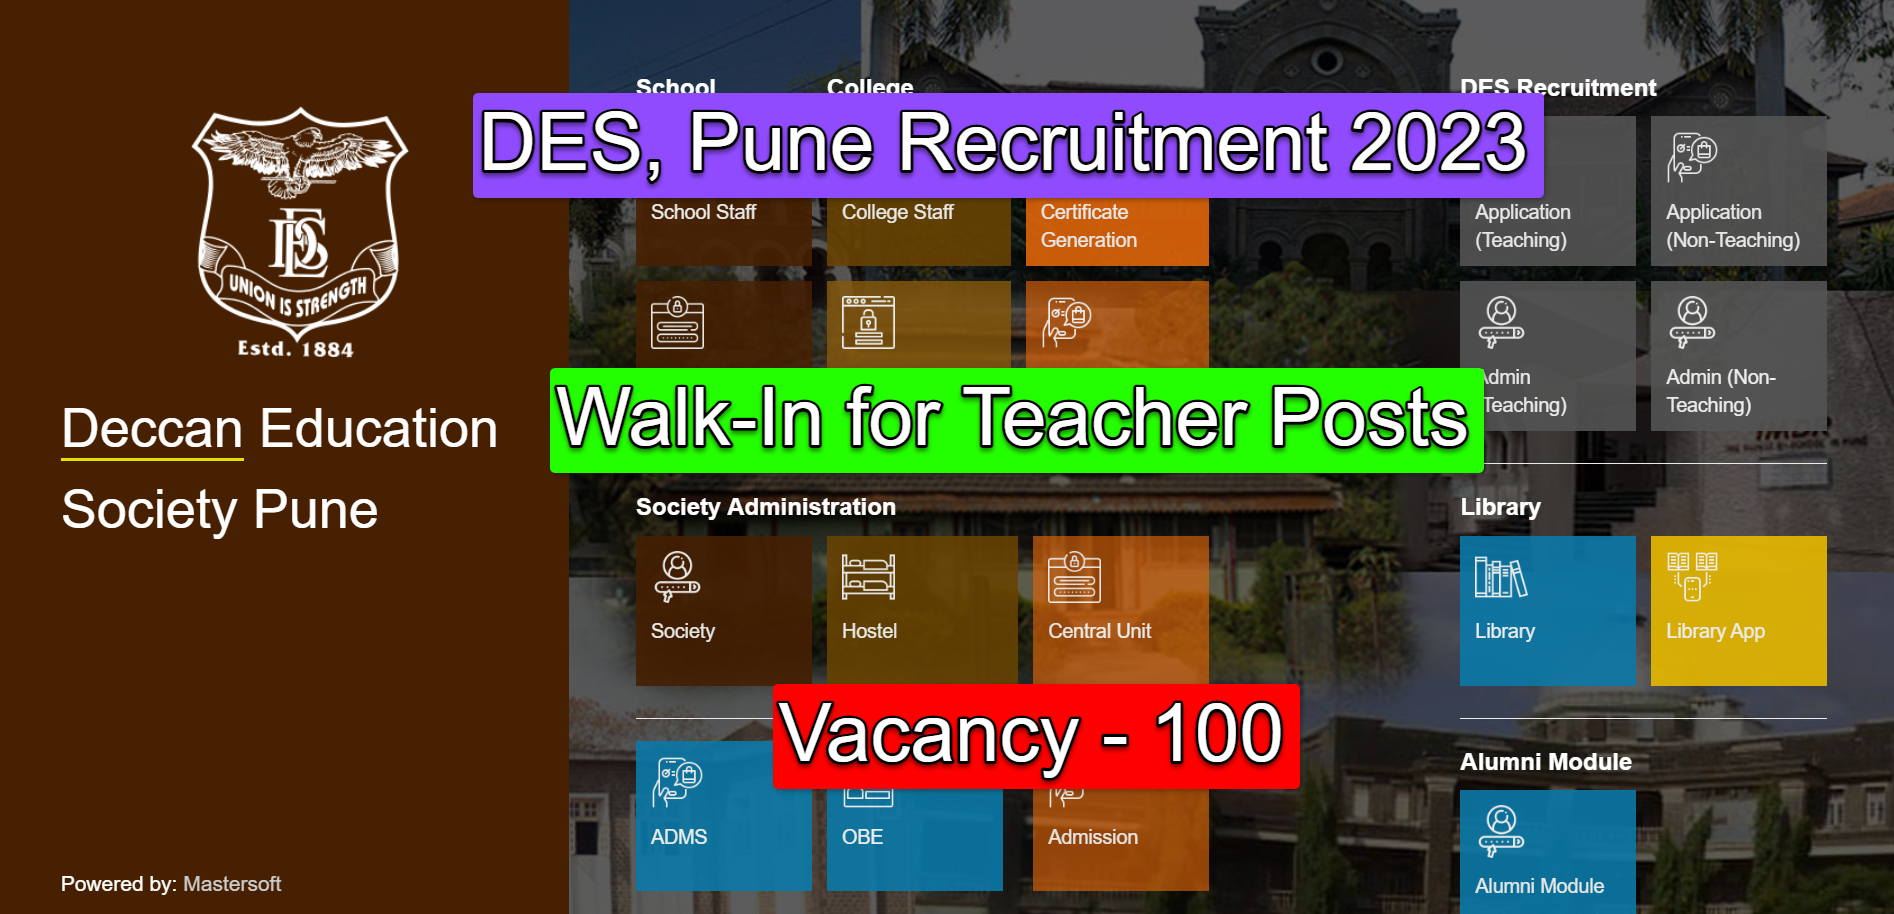 DES, Pune Recruitment 2023 – Walk-In for Teacher Posts